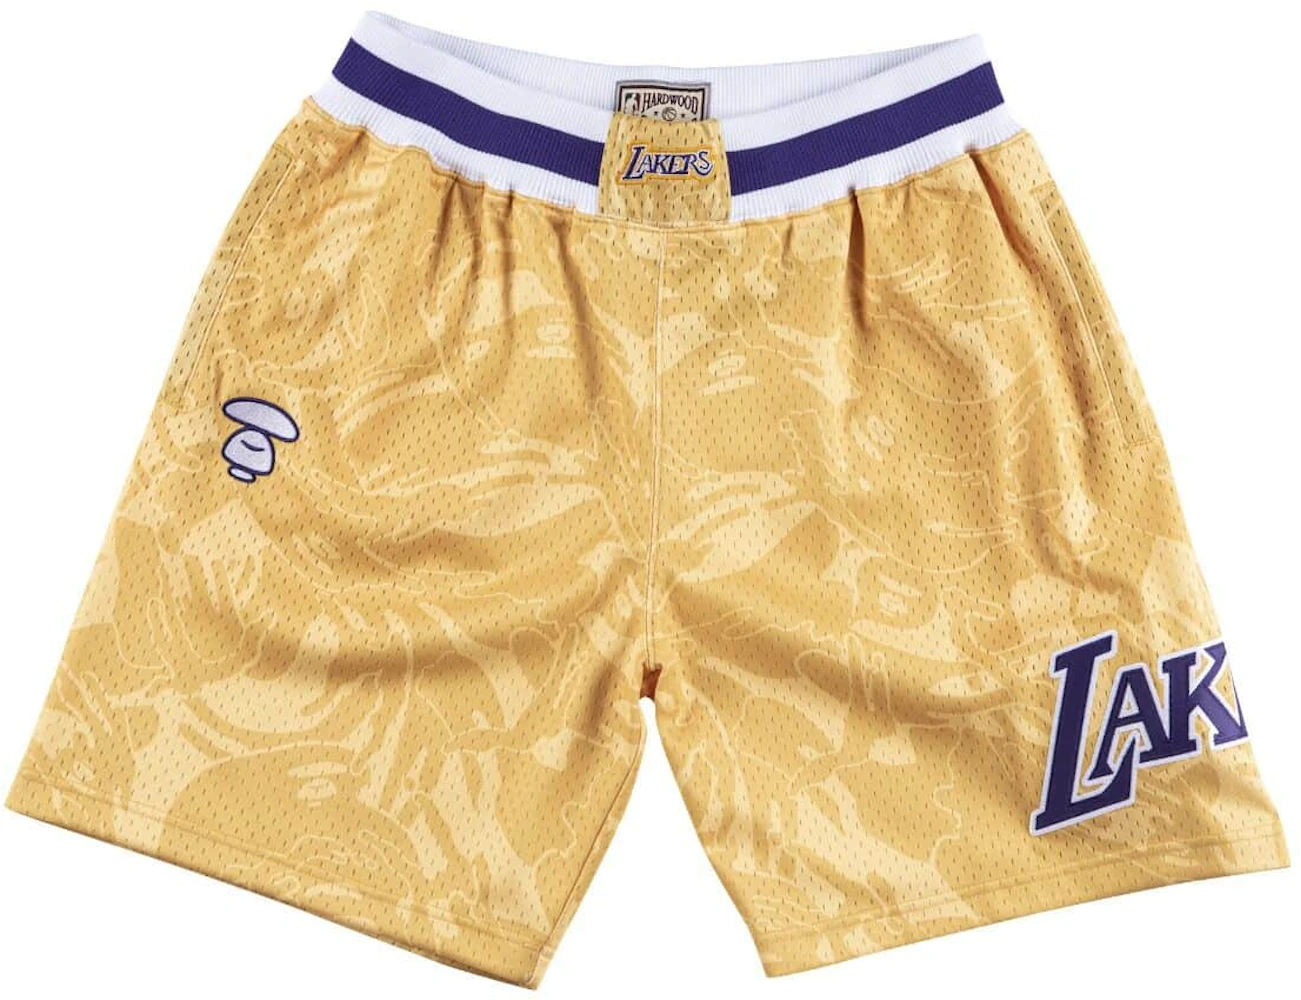 Mitchell & Ness NBA Authentic Shorts (Seattle Supersonics) $125